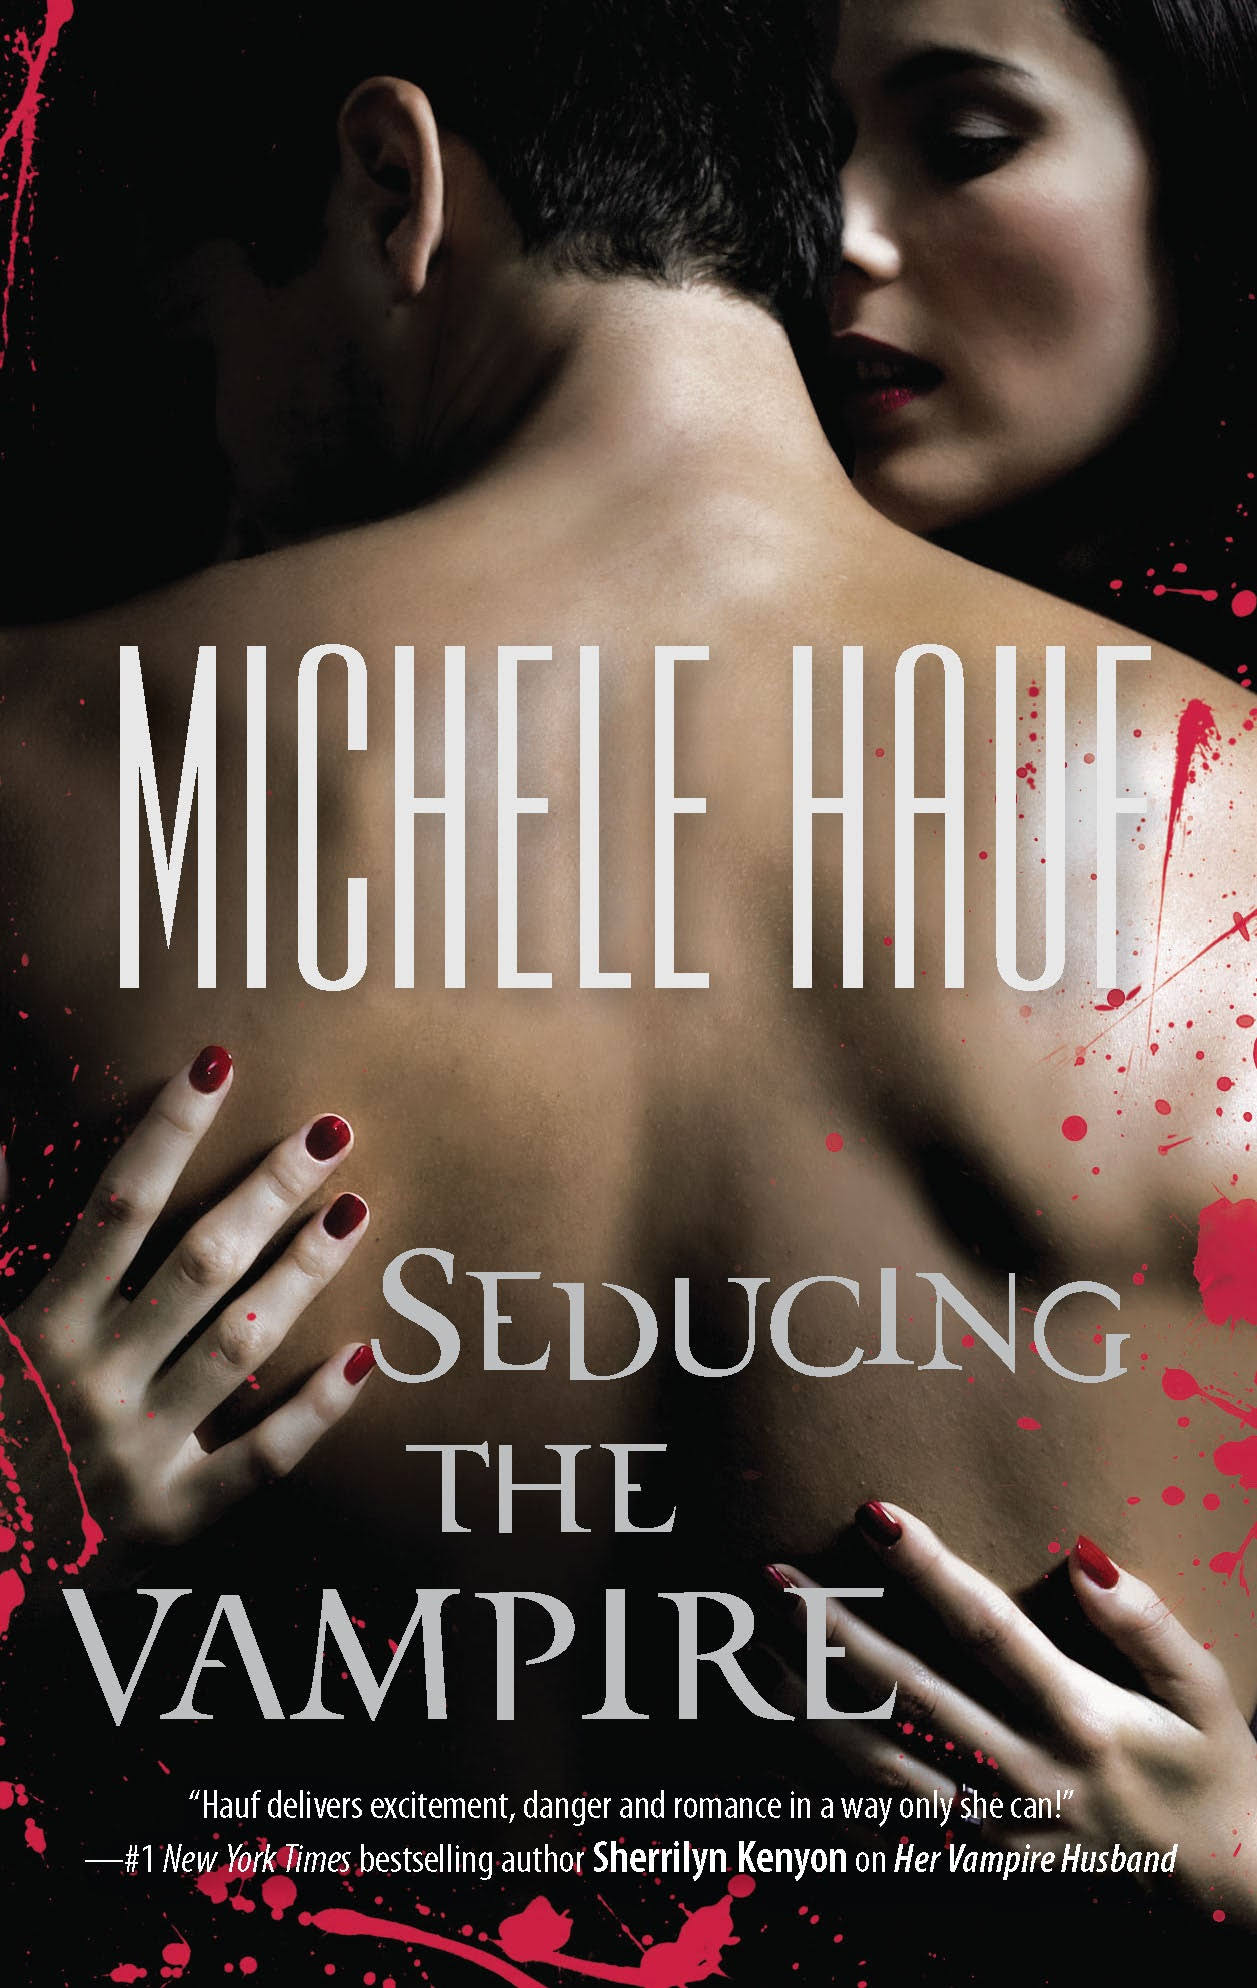 Seducing The Vampire - Michele Hauf